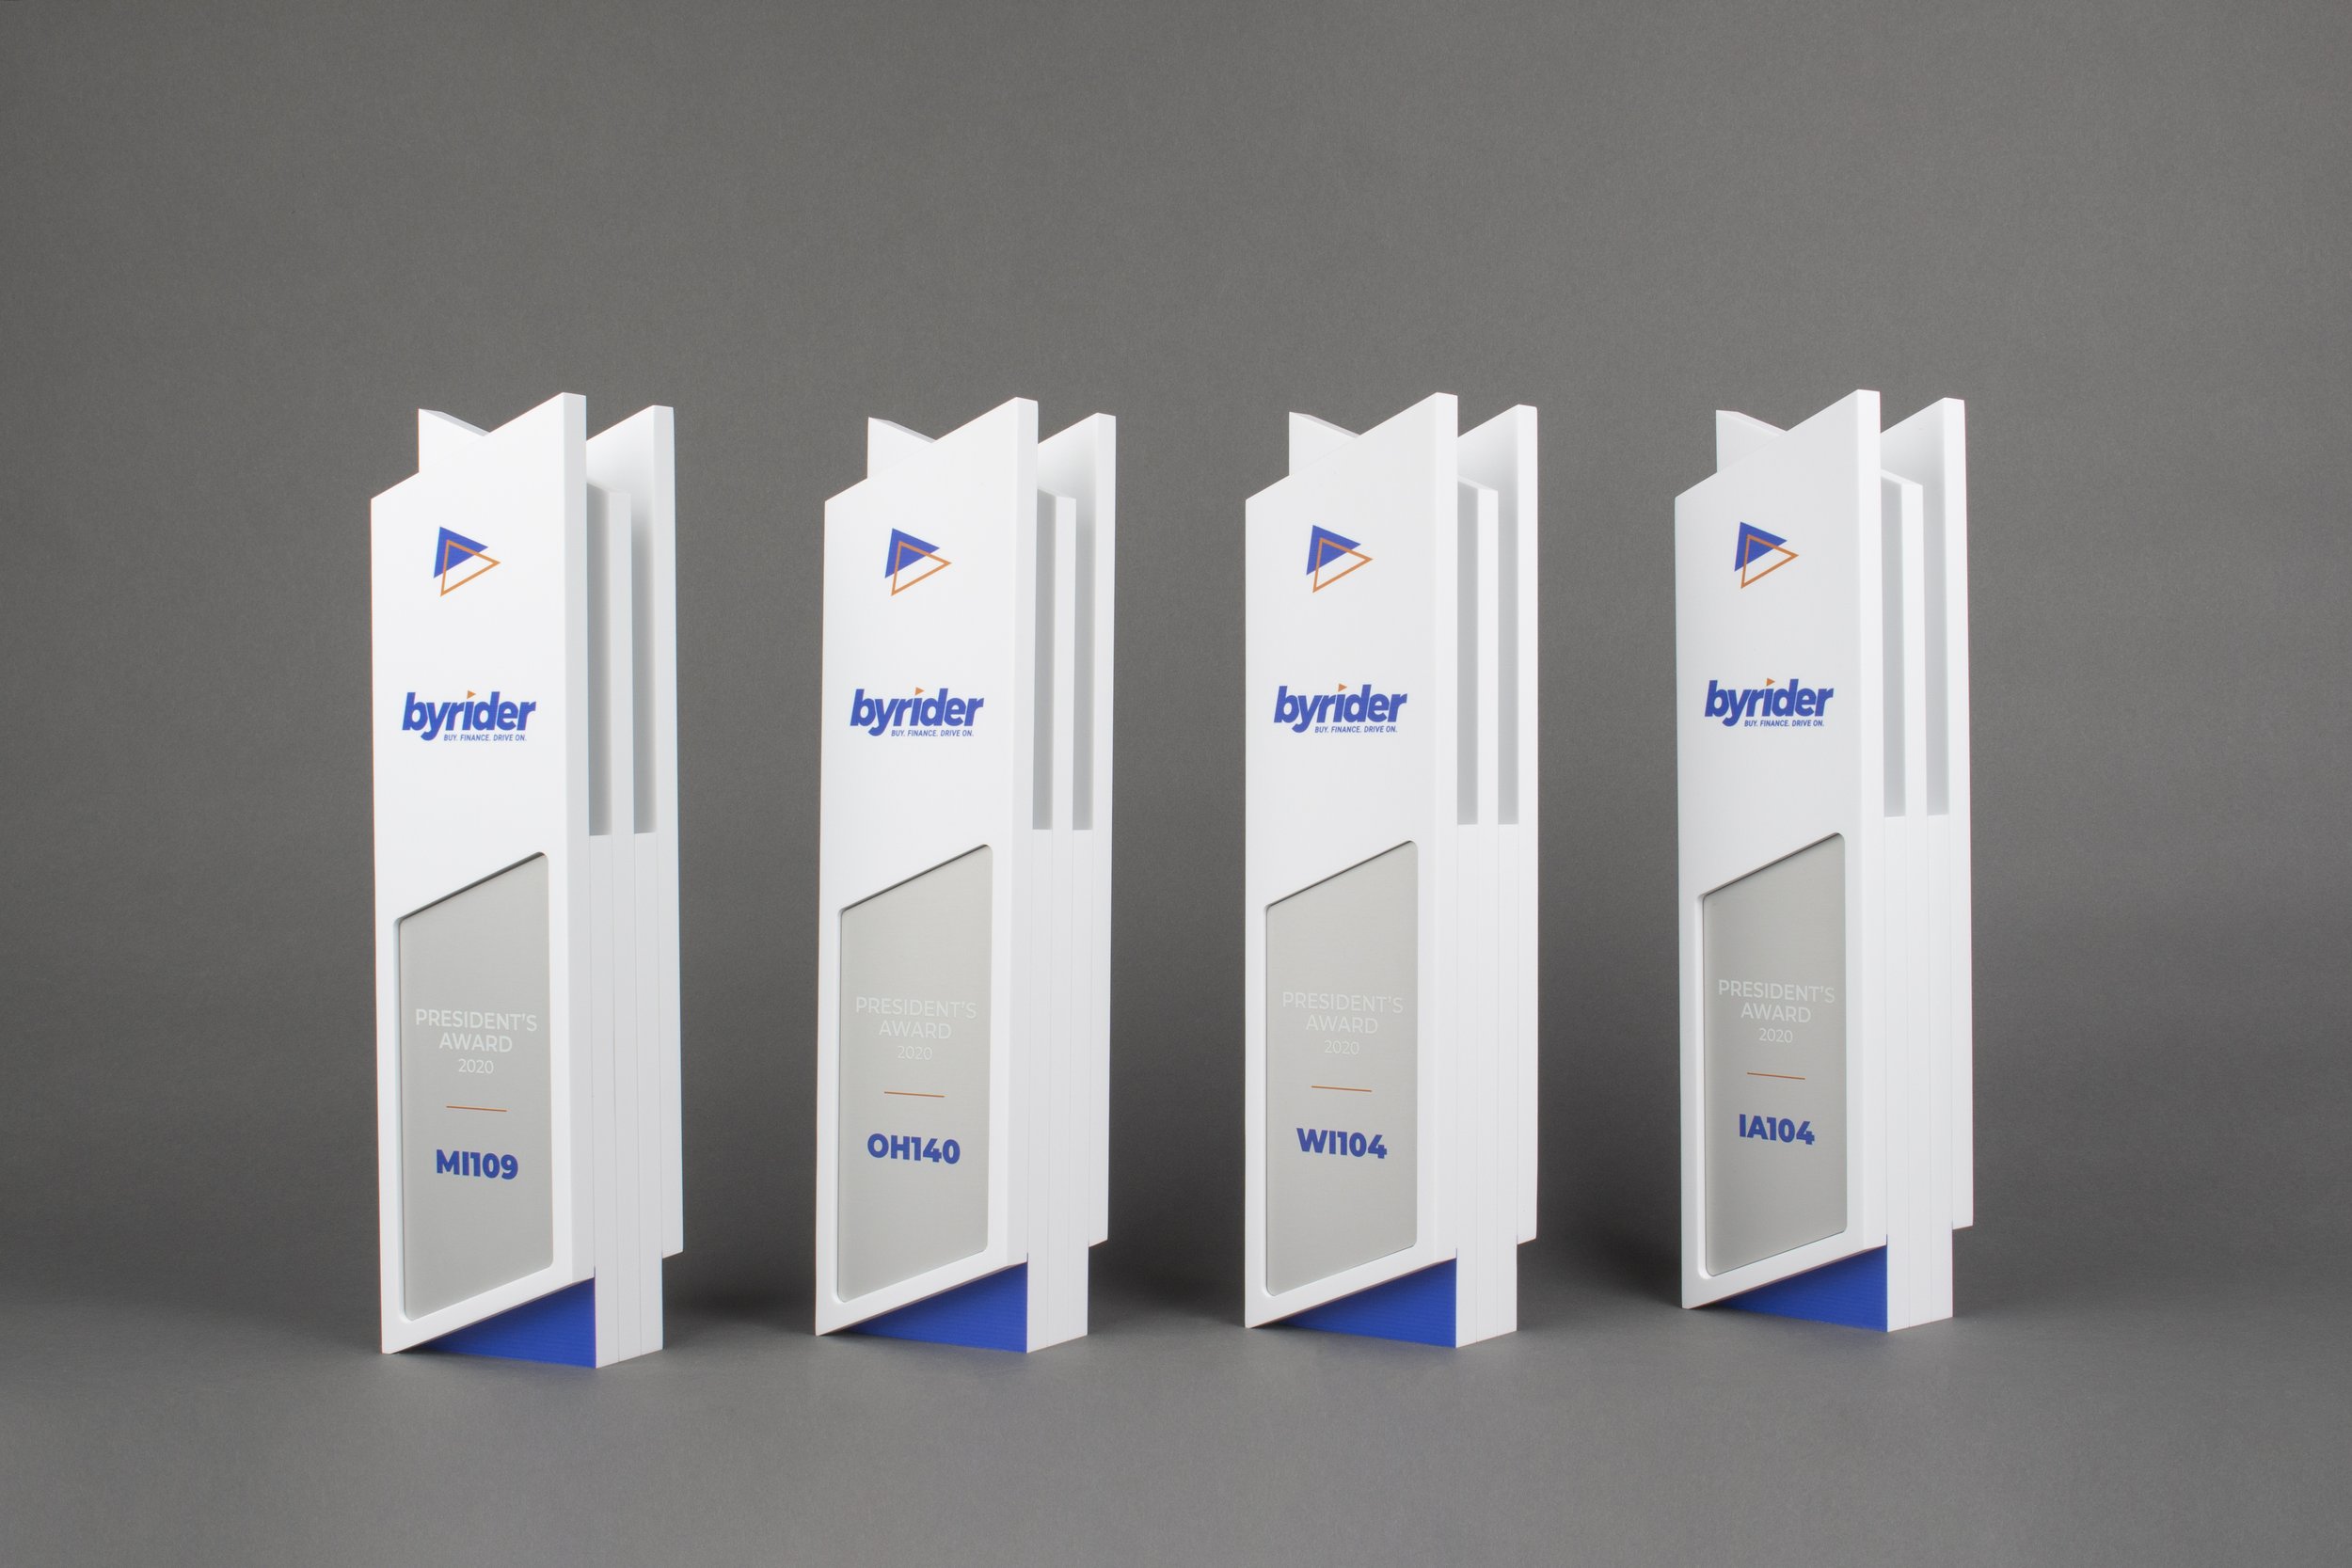 byrider annual conference awards custom design